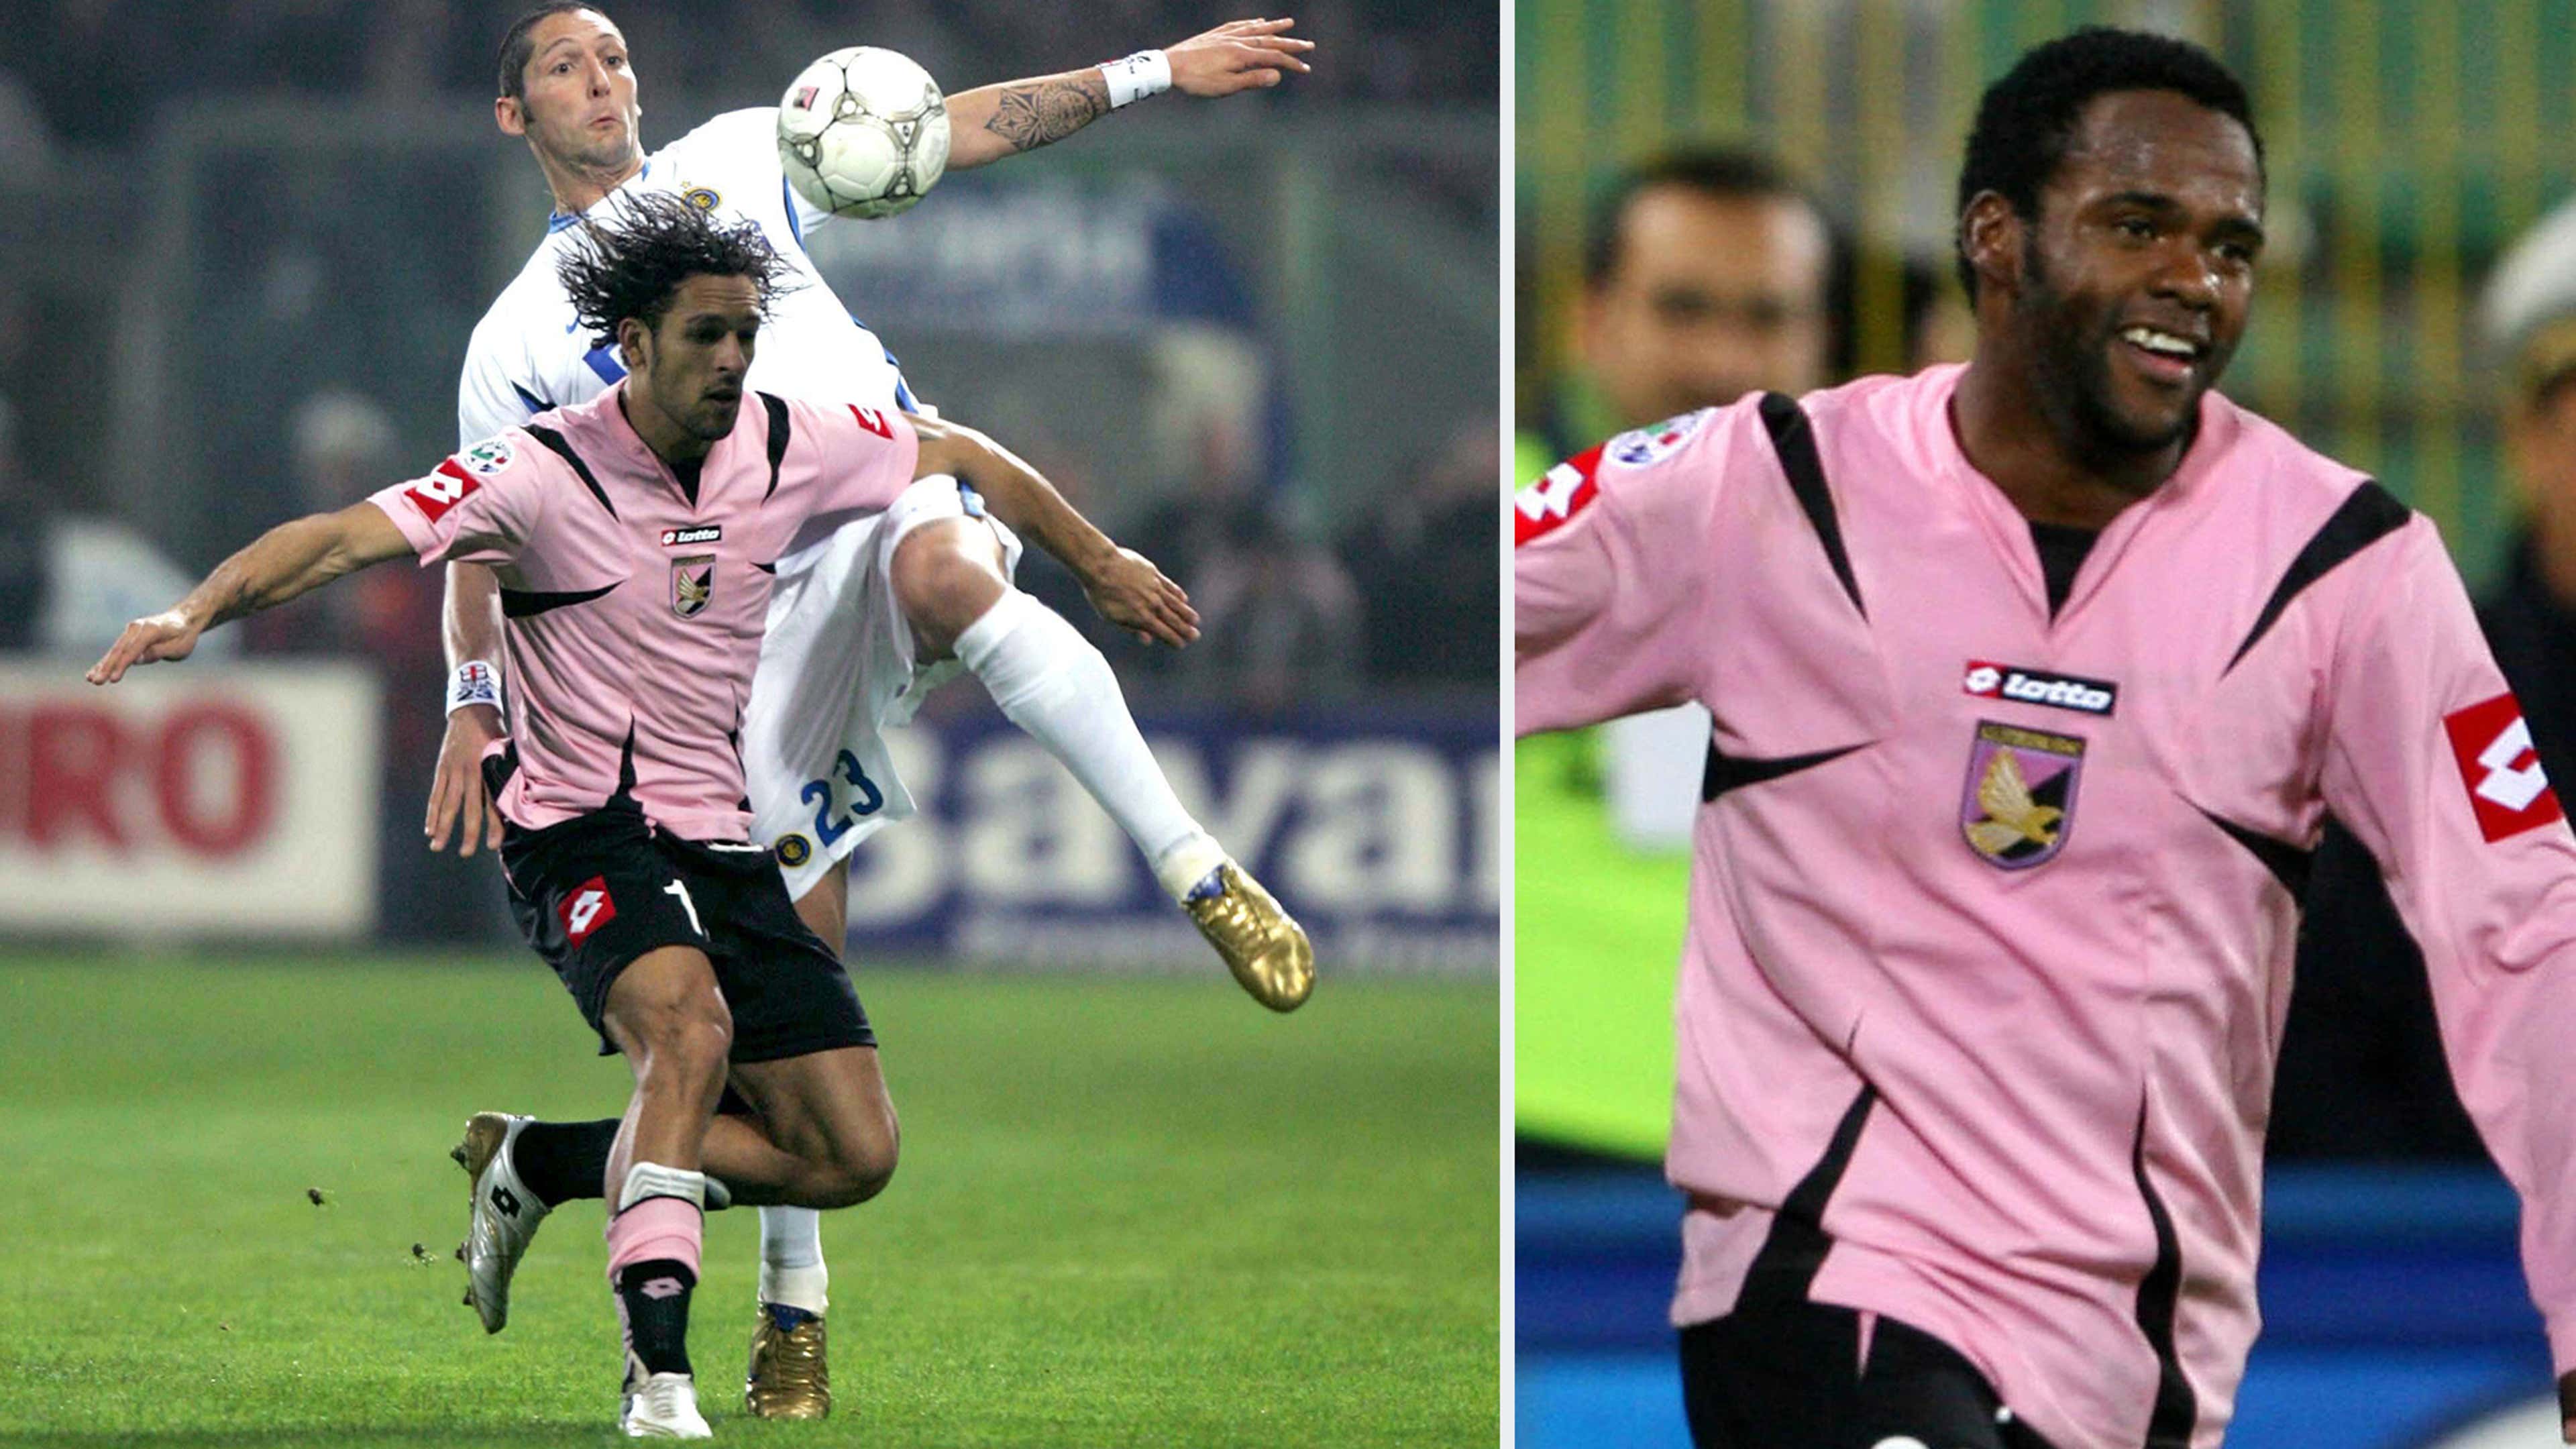 Palermo Home Football Shirt 2016-17